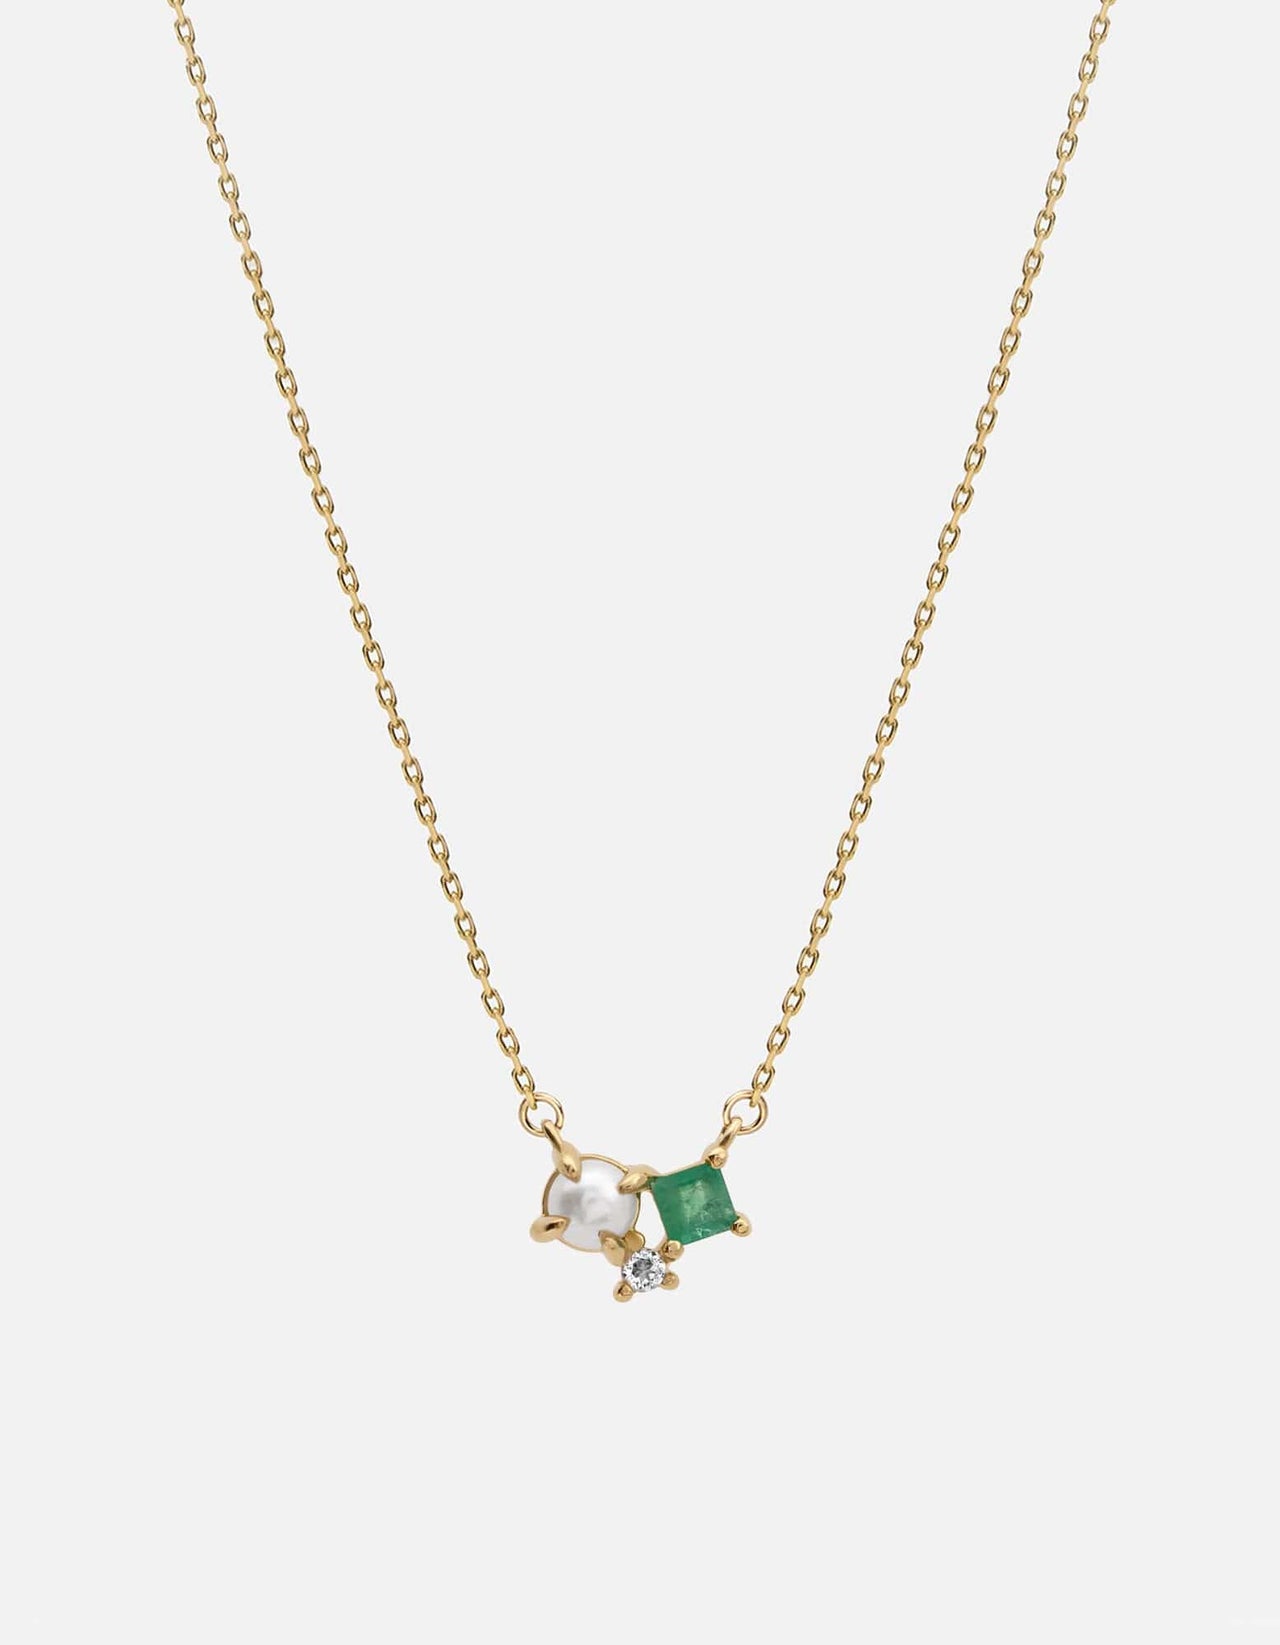 White Gold Pavé Diamond Necklace Move | Messika 03994-WG